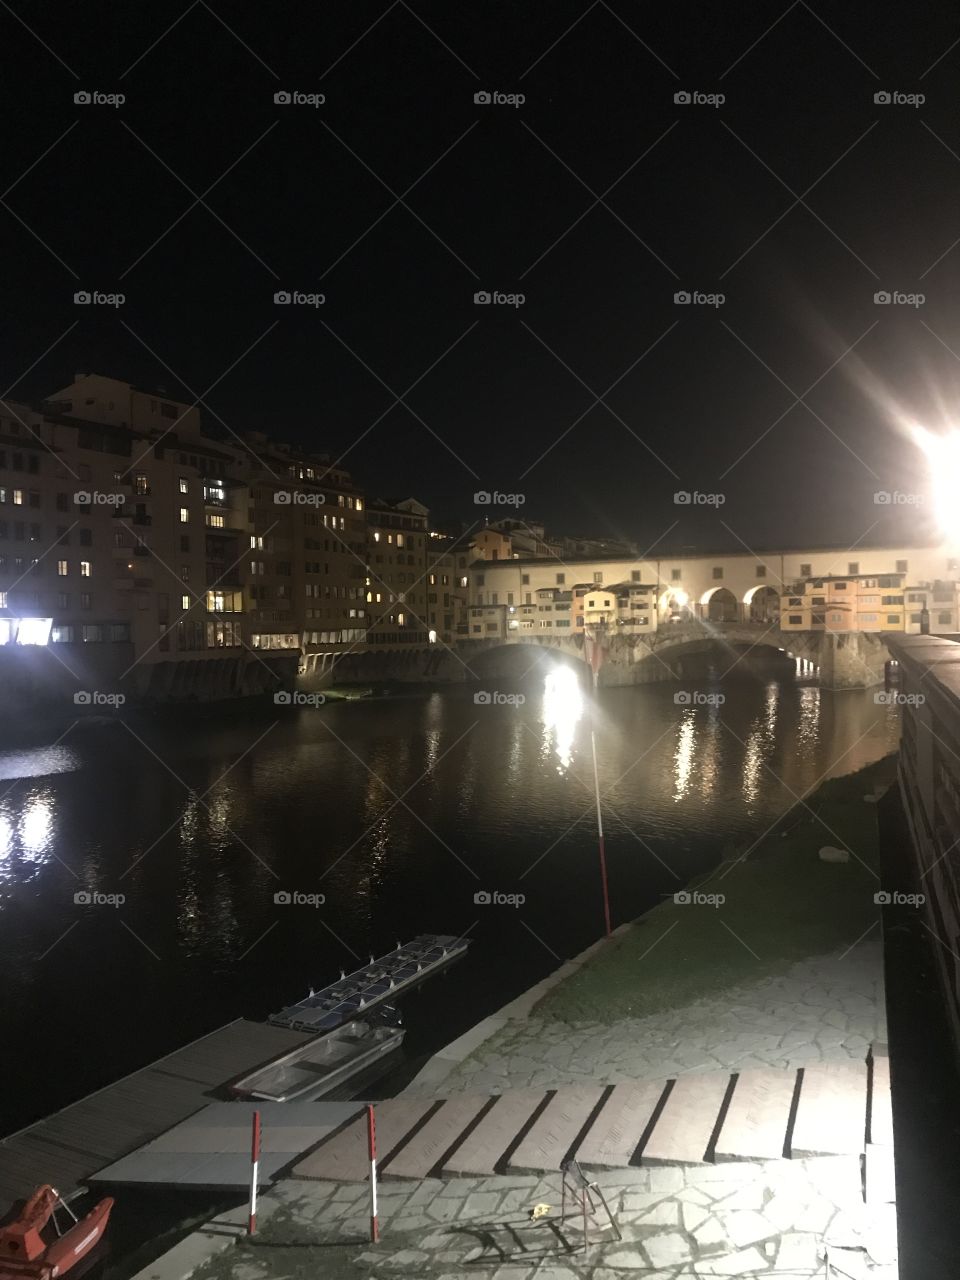 The ponte vecchio at night.